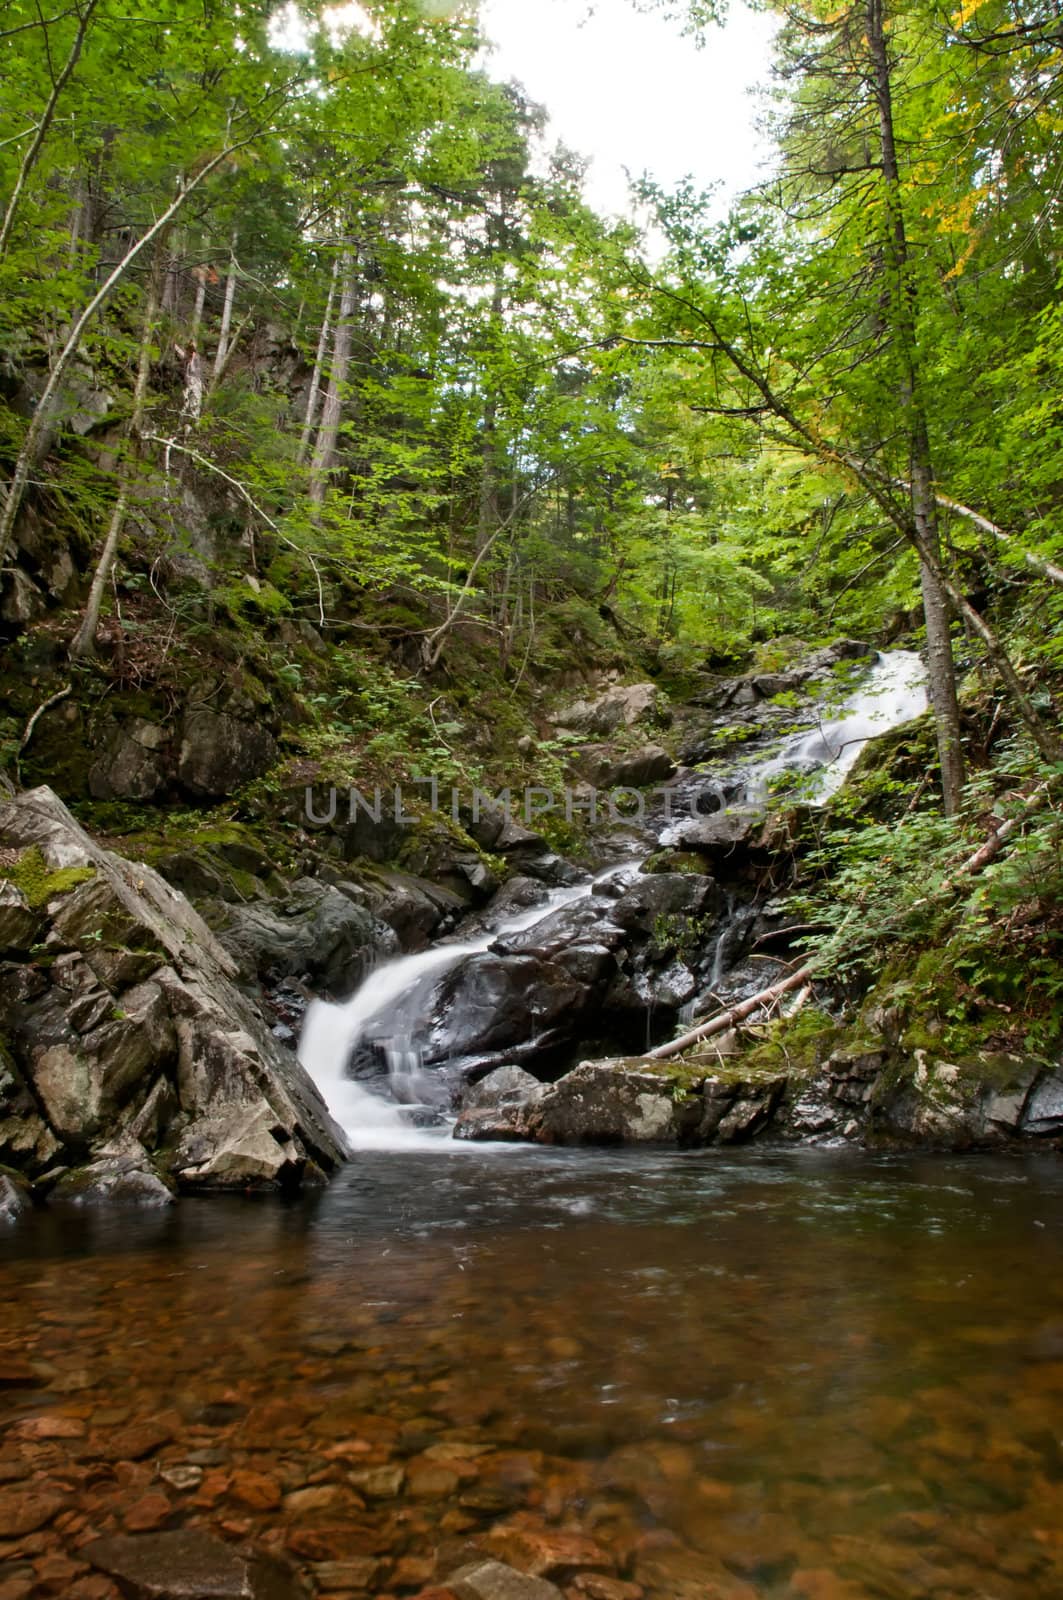 Waterfall in a forest in autumn season by 3523Studio